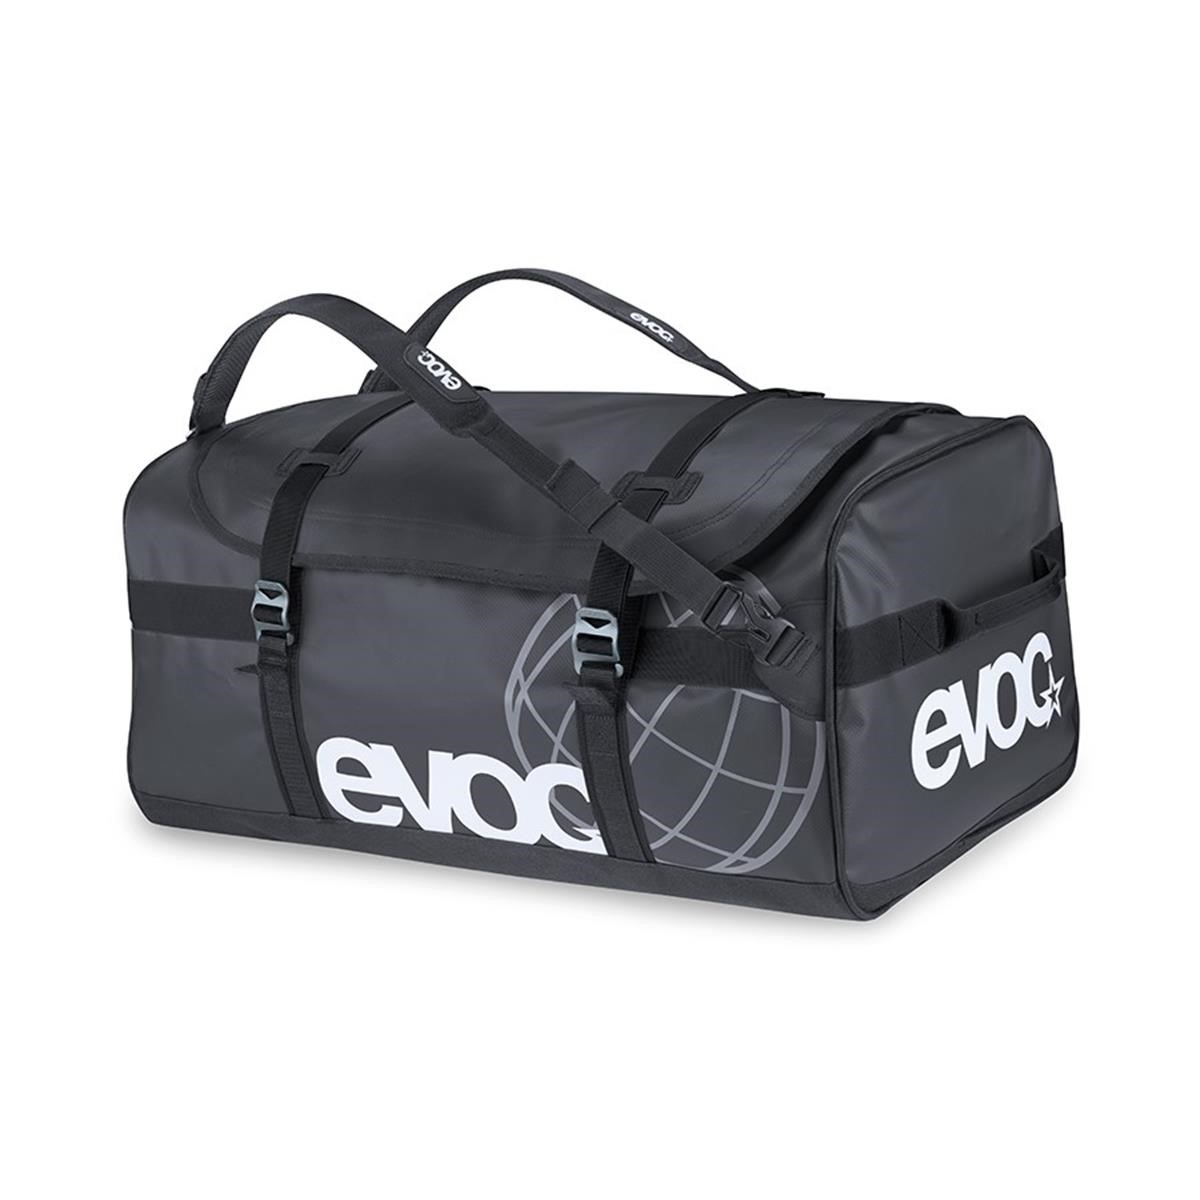 Evoc Travel Bag 2016 Duffle Bag Black, 60 Liter